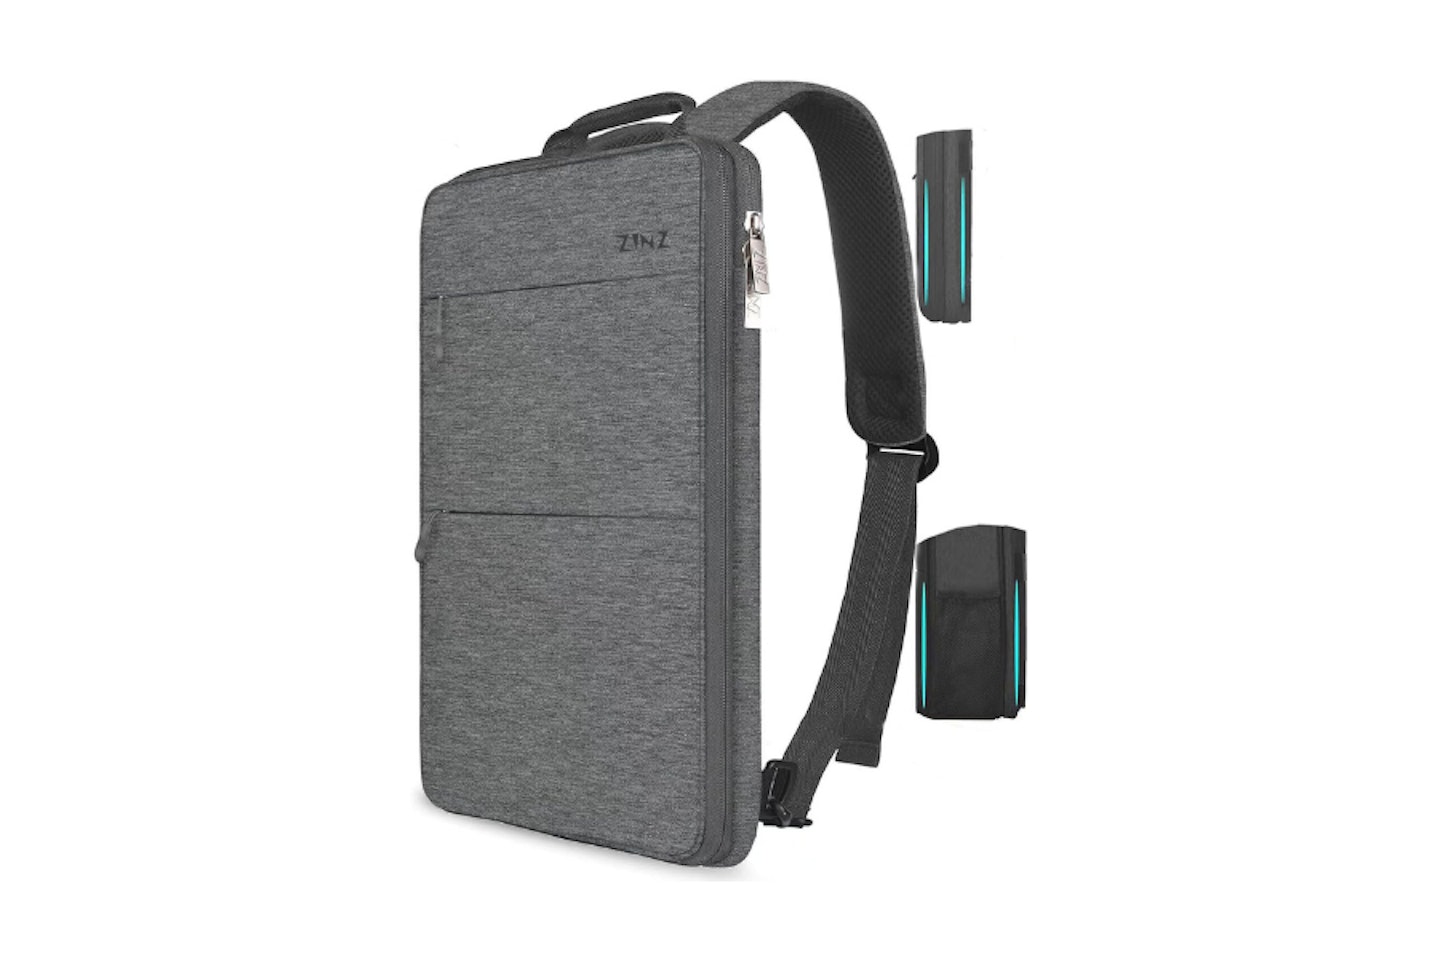 ZINZ Slim & Expandable Laptop Backpack